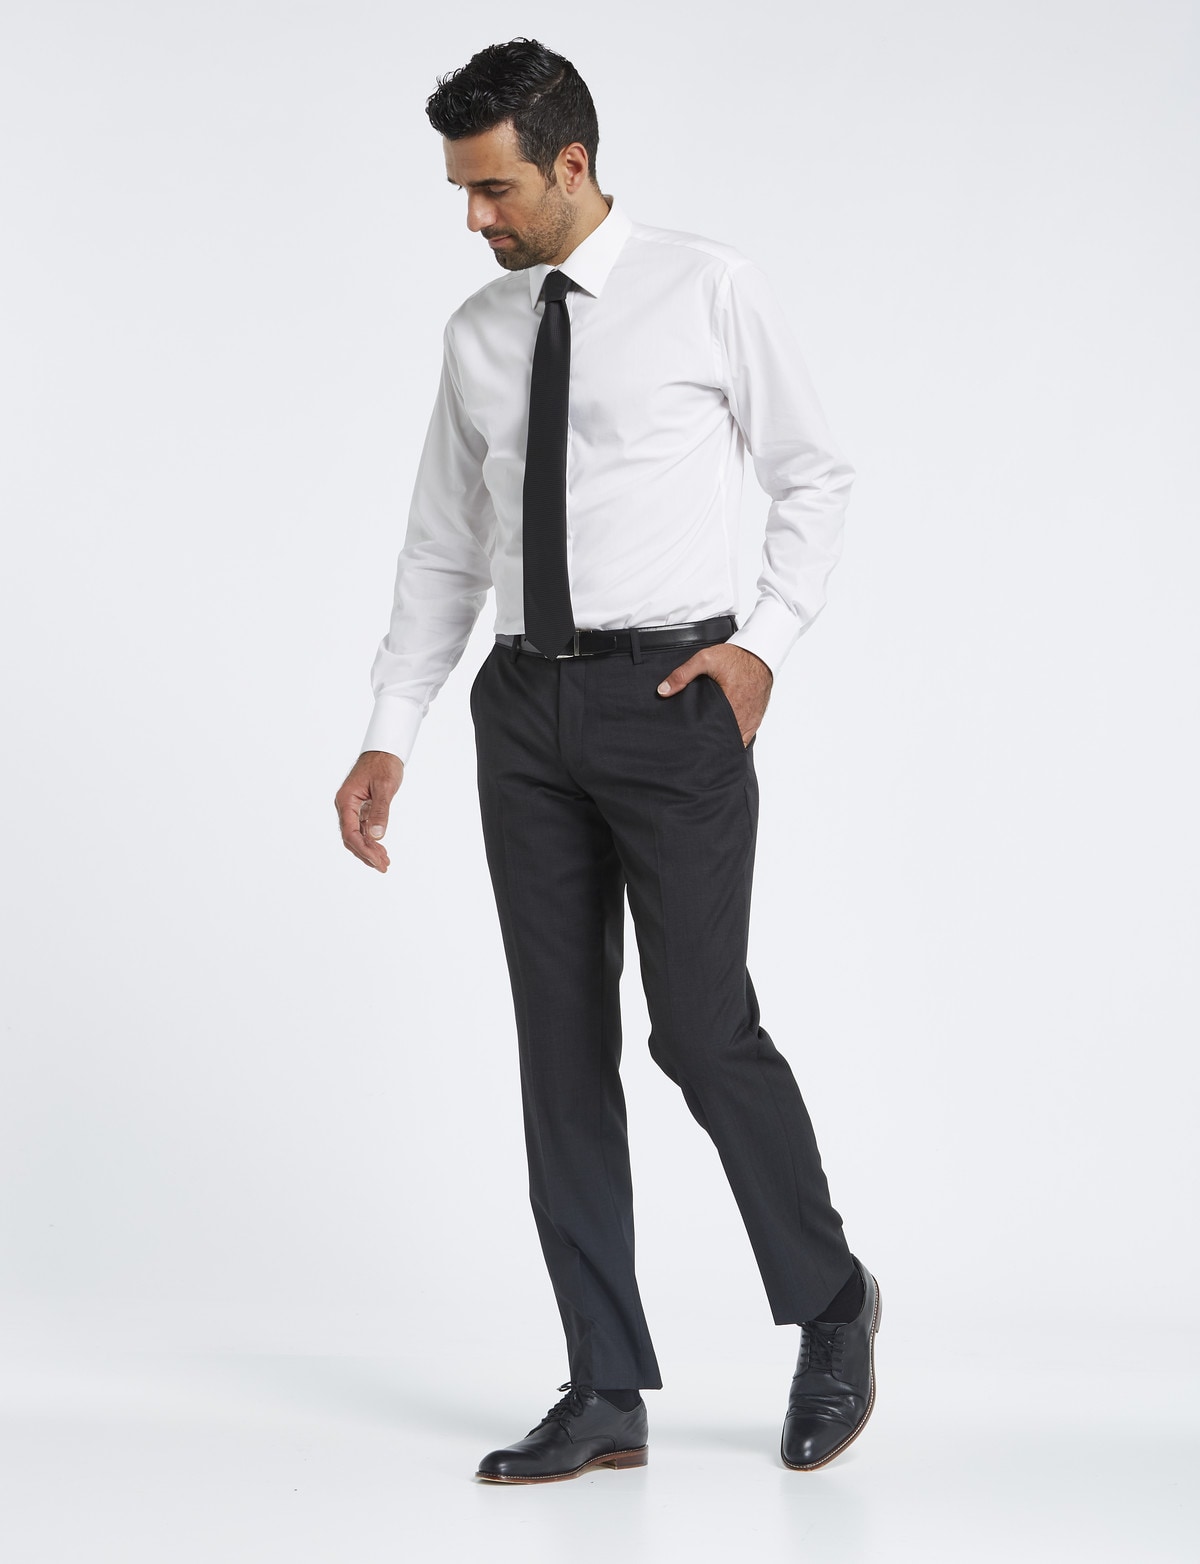 Van Heusen Long-Sleeve Plain Shirt, Euro Fit, White - Formal Shirts